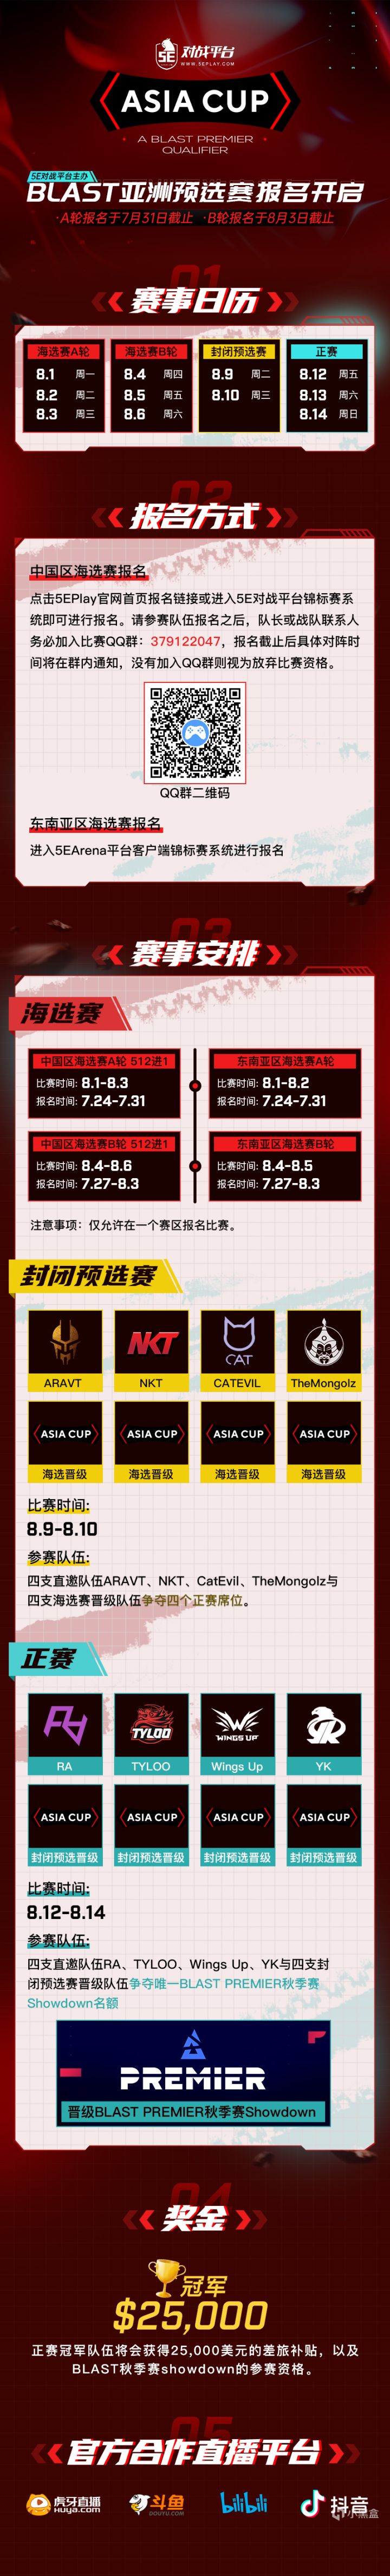 【CS:GO】5E對戰平臺 BLAST亞洲預選賽報名正式開啟-第4張